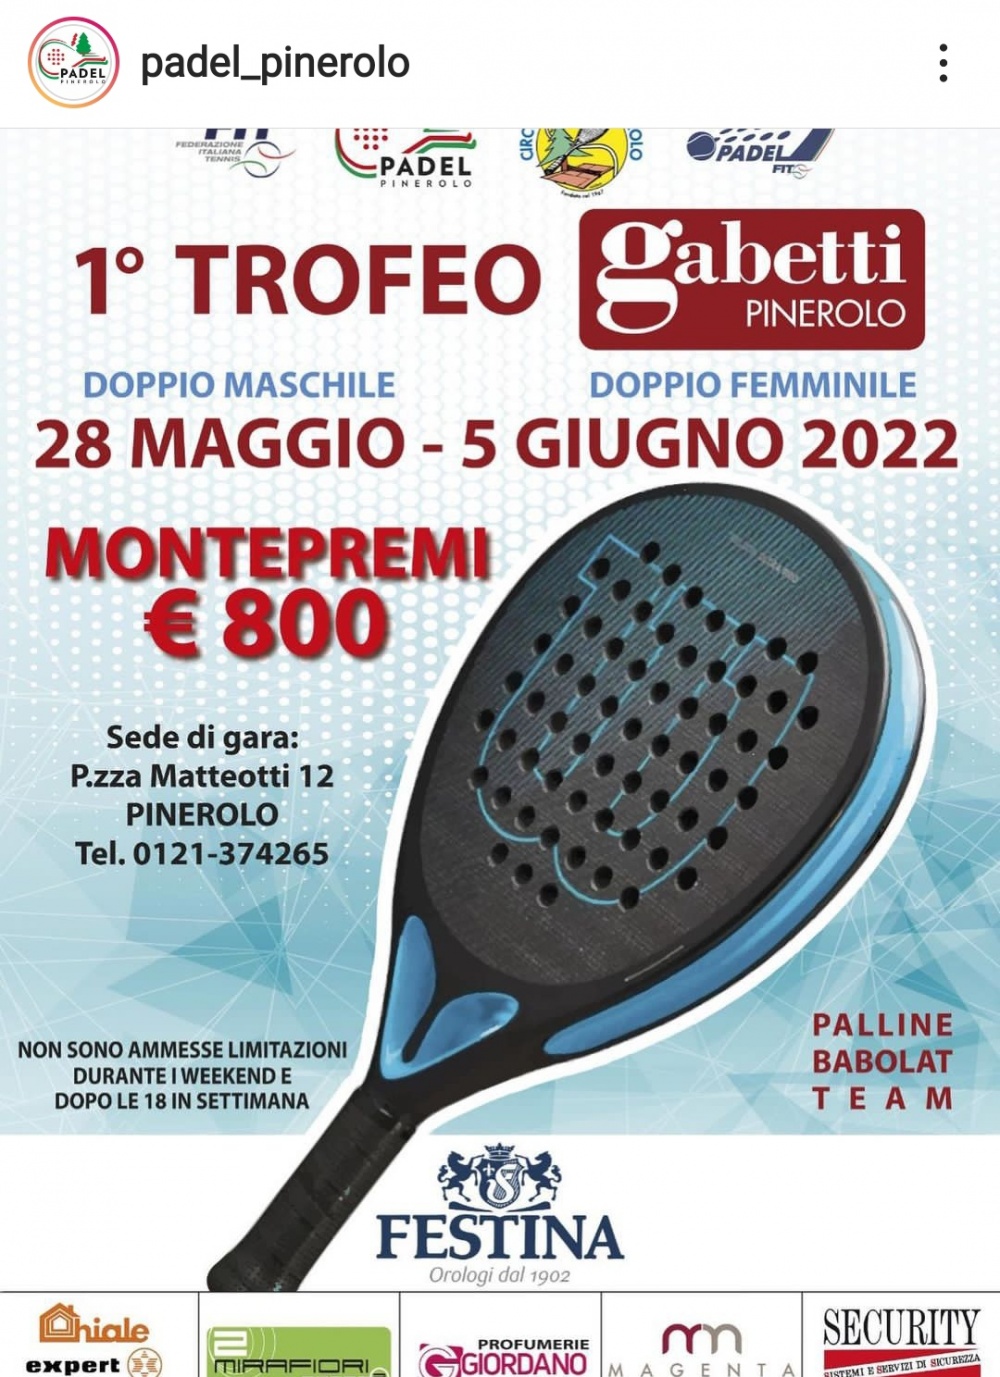 1 Trofeo Padel Gabetti Pinerolo